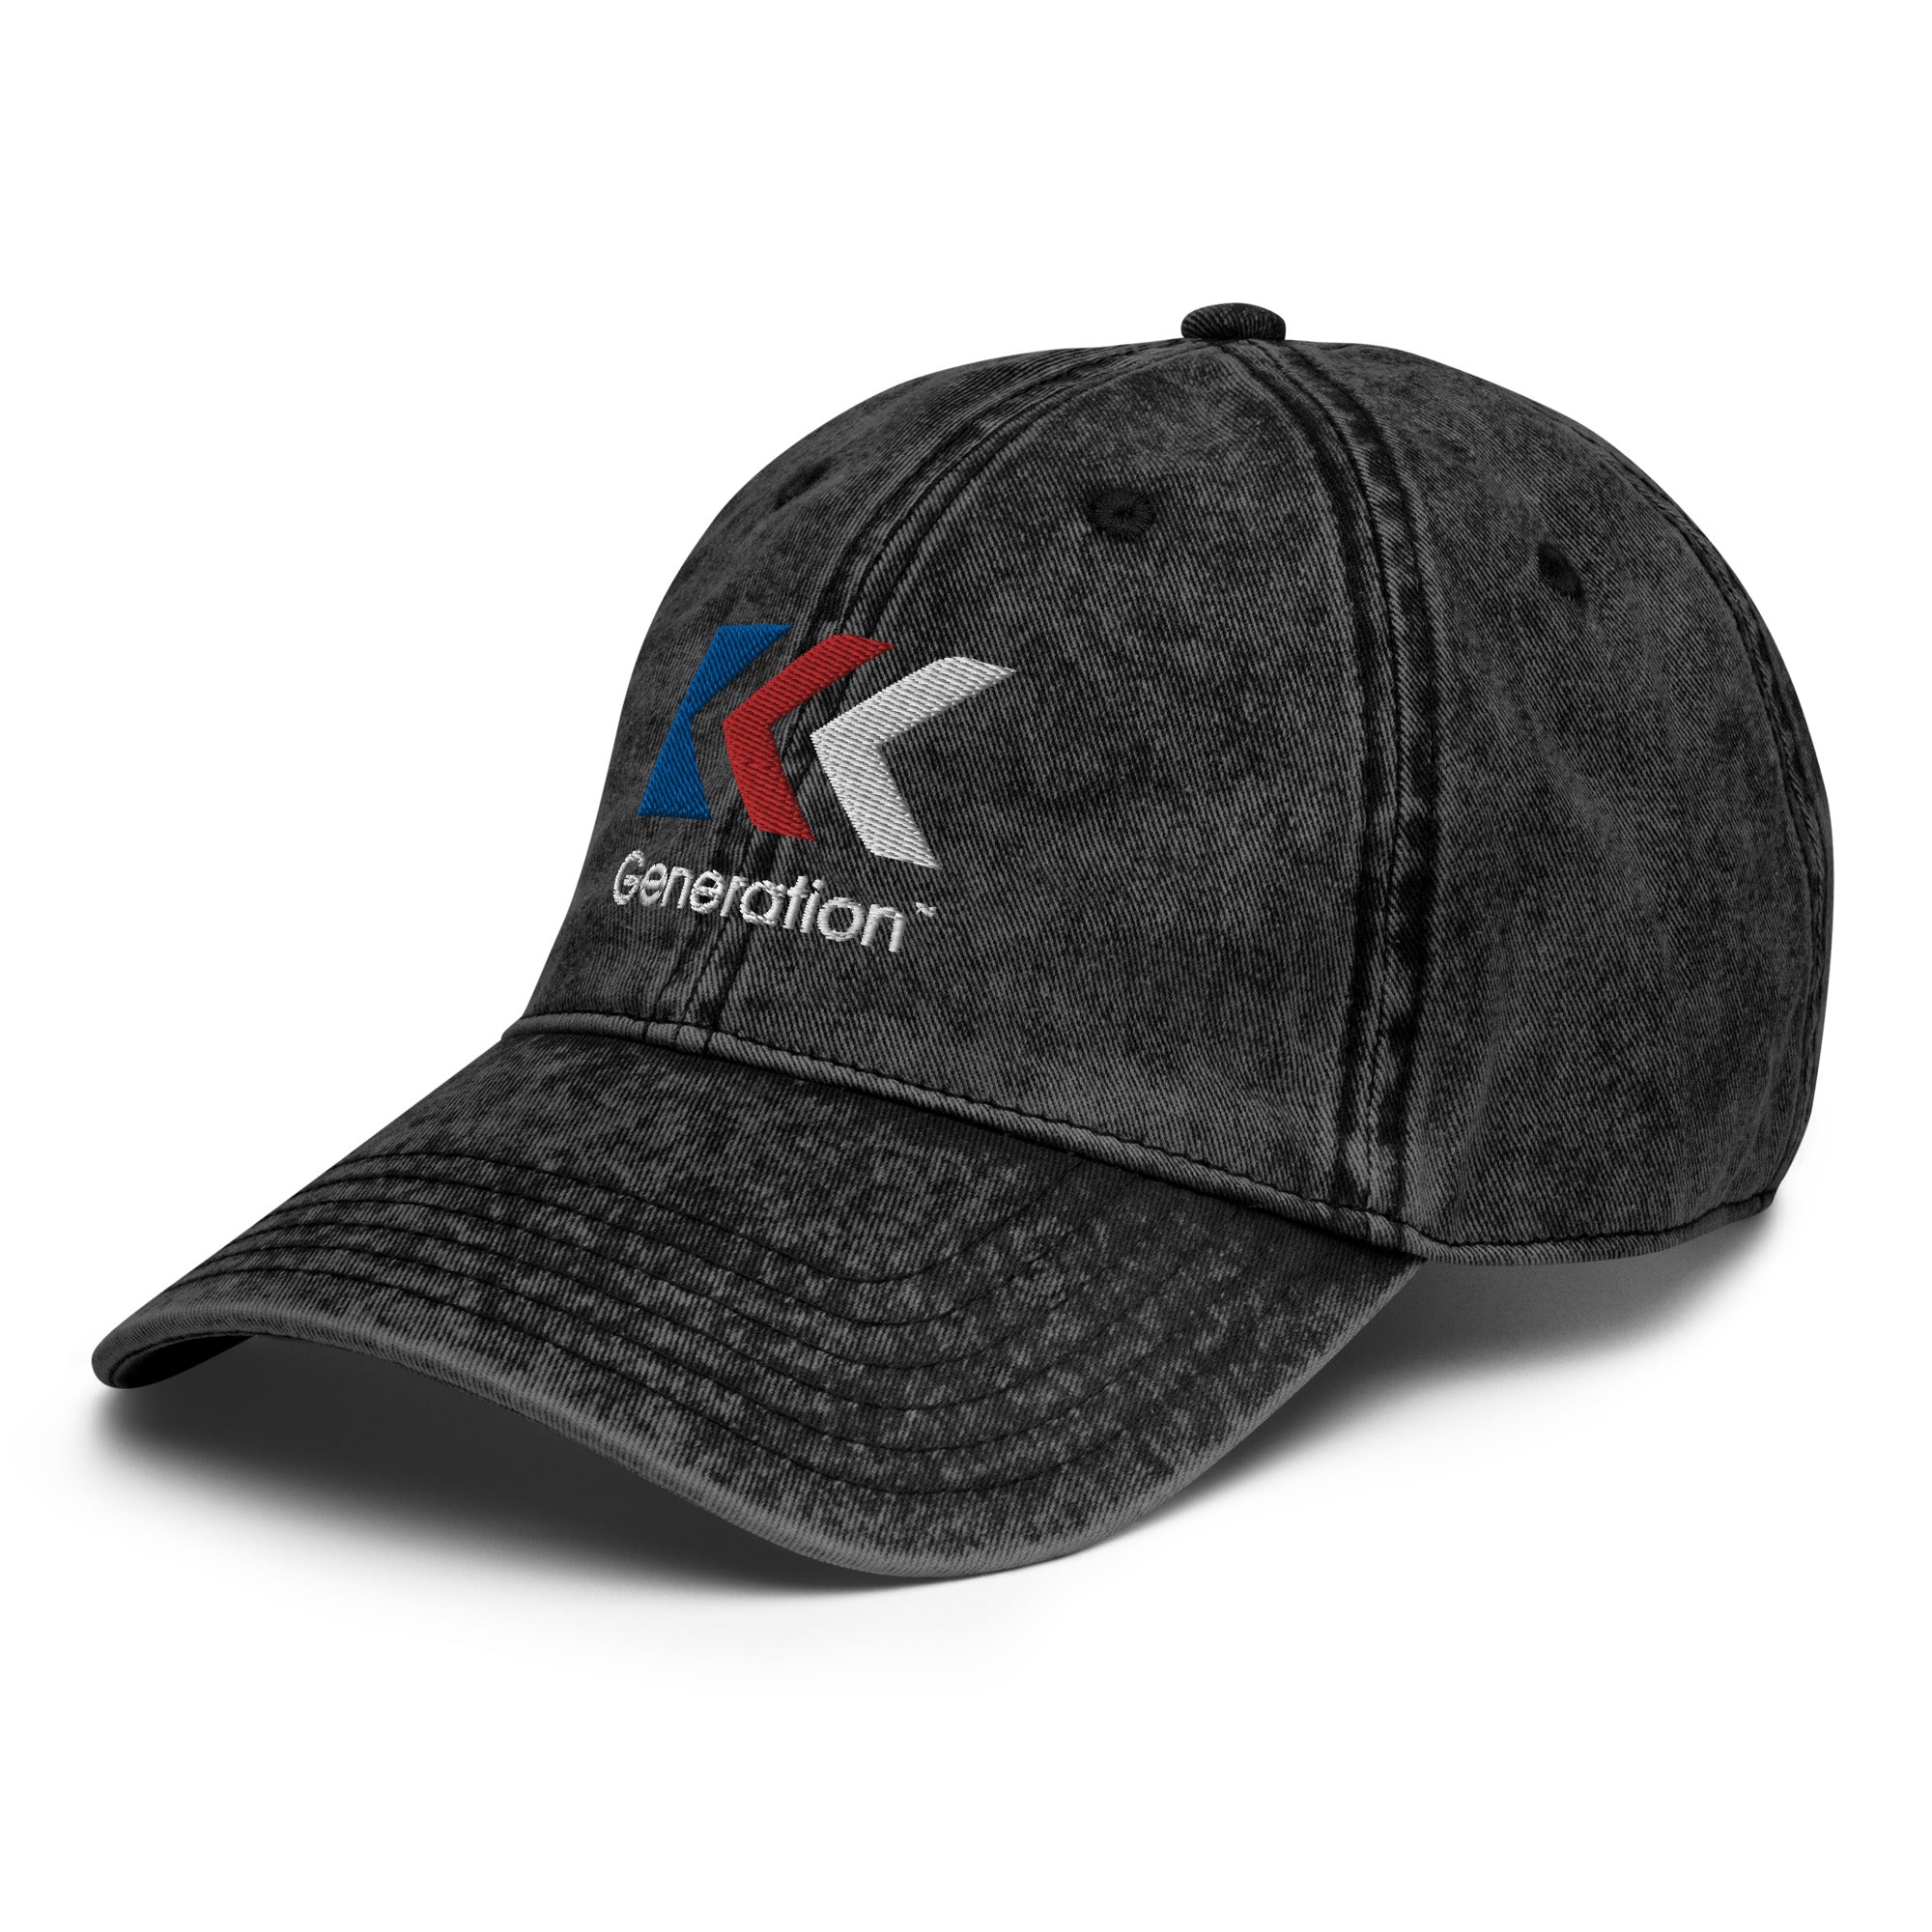 🇵🇷 Puerto Rico Triple K G vintage twill cap